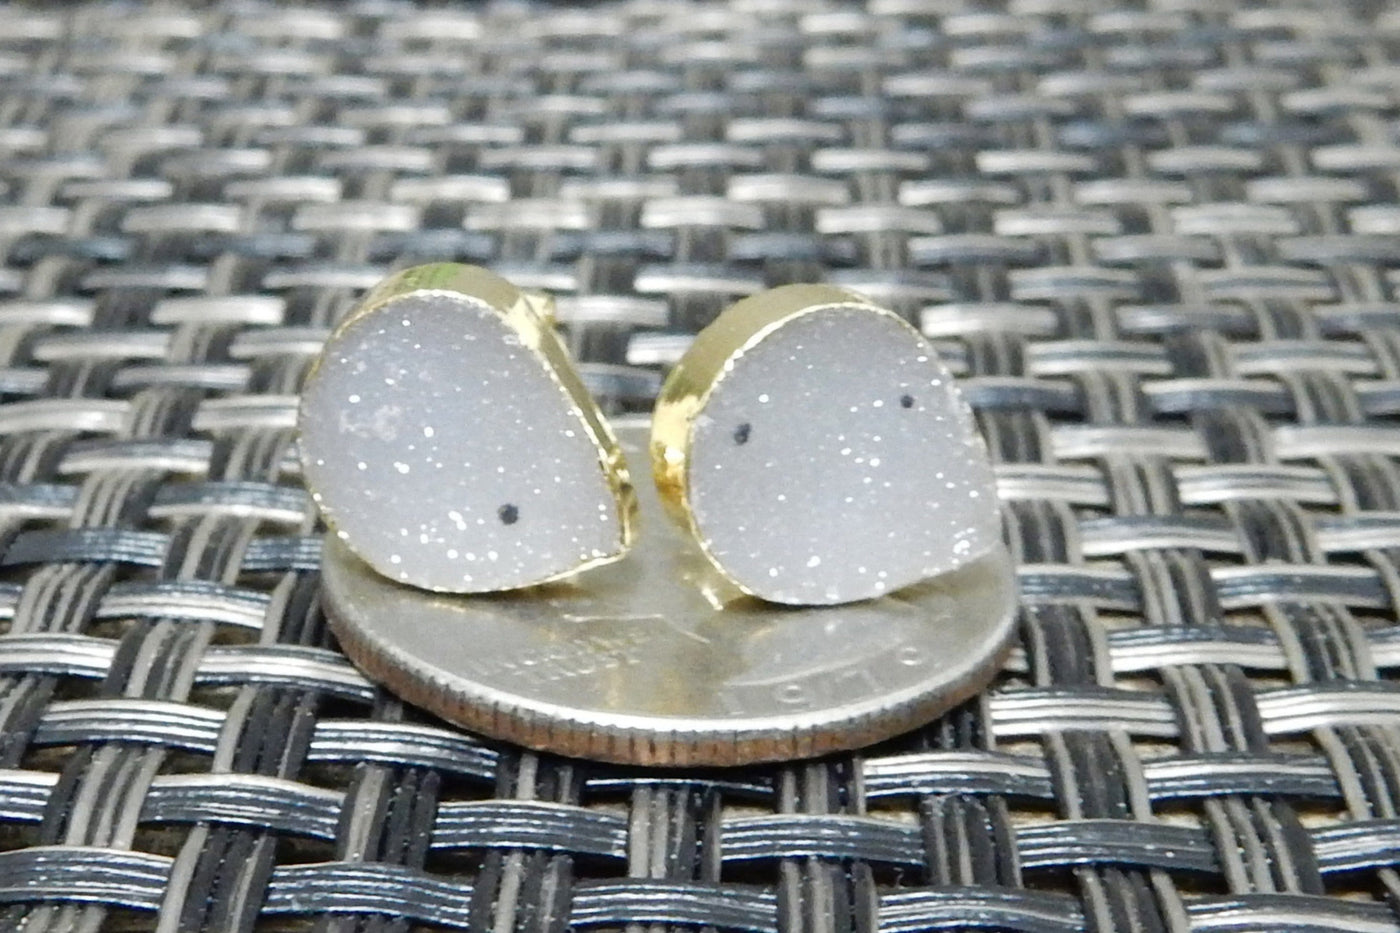 A teardrop Shape Druzy Stud Earring set on a quarter for sizing